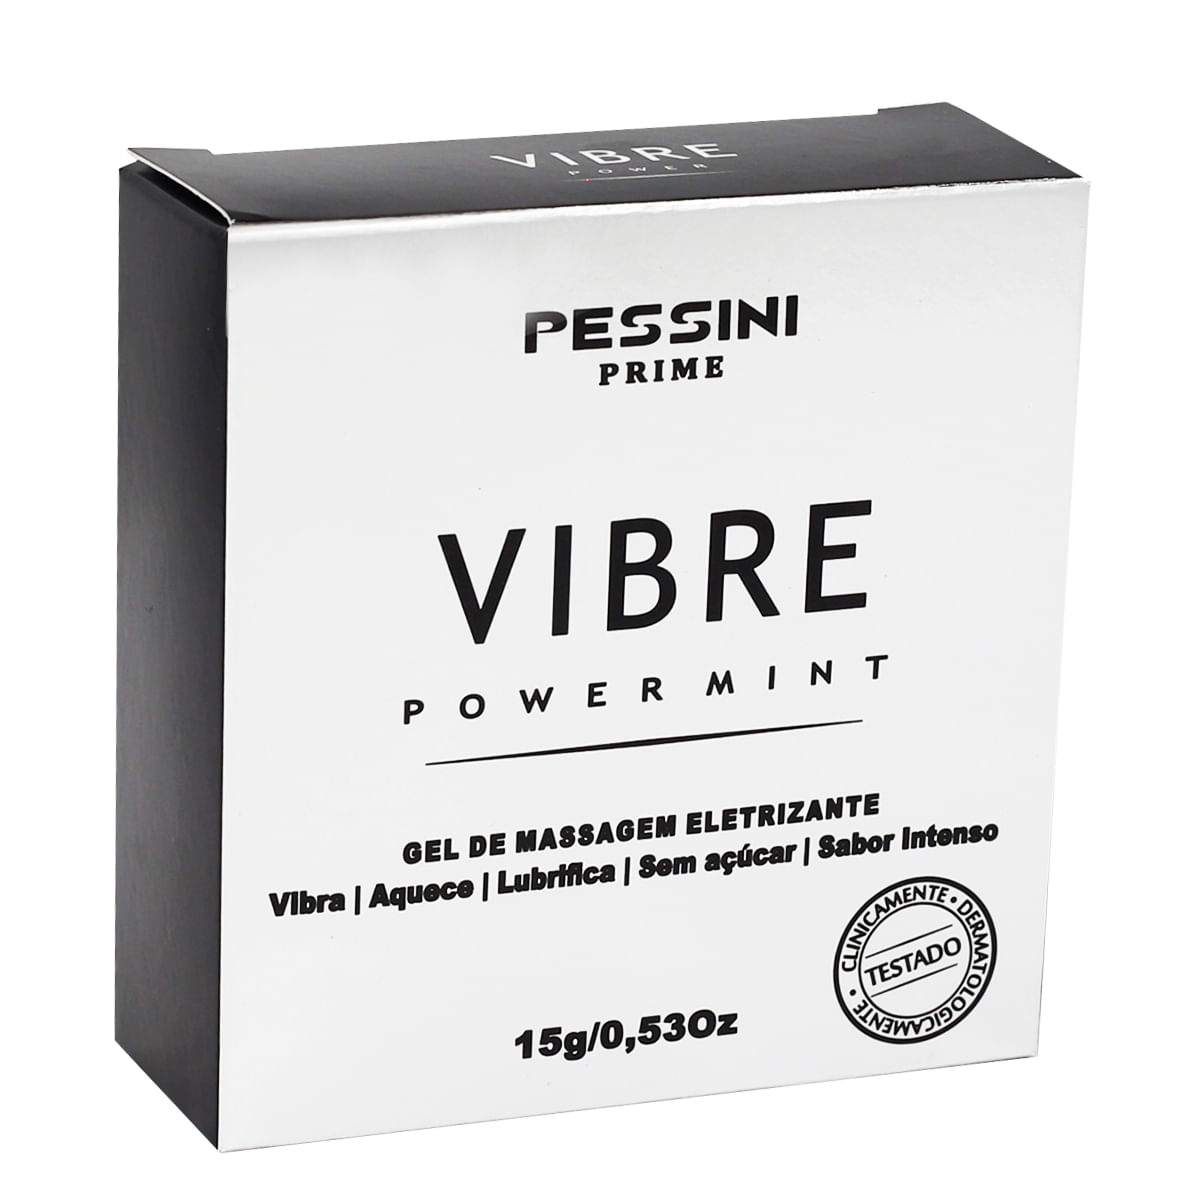 Vibre Power Mint Gel de Massagem Eletrizante 15g Pessini